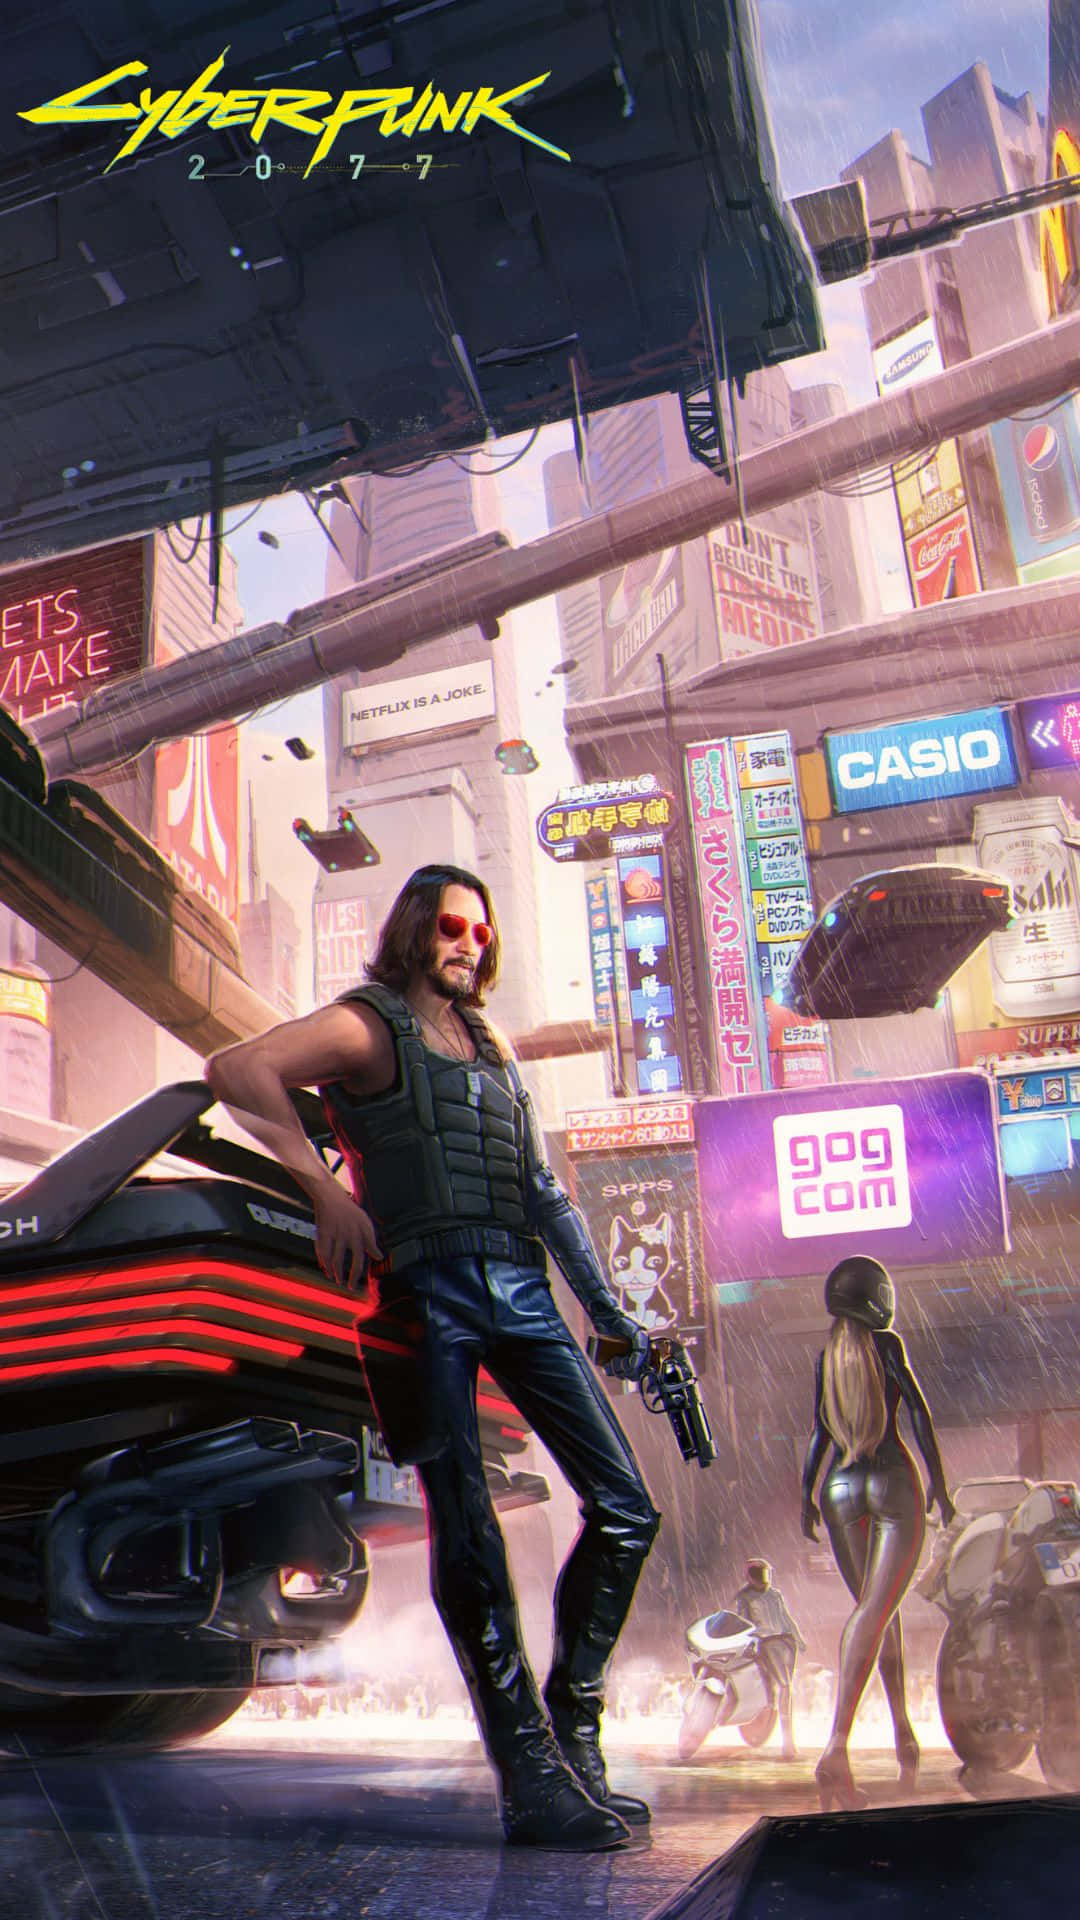 Androidcyberpunk 2077 Bakgrundsbild Med Johnny Silverhand Bredvid En Bil.